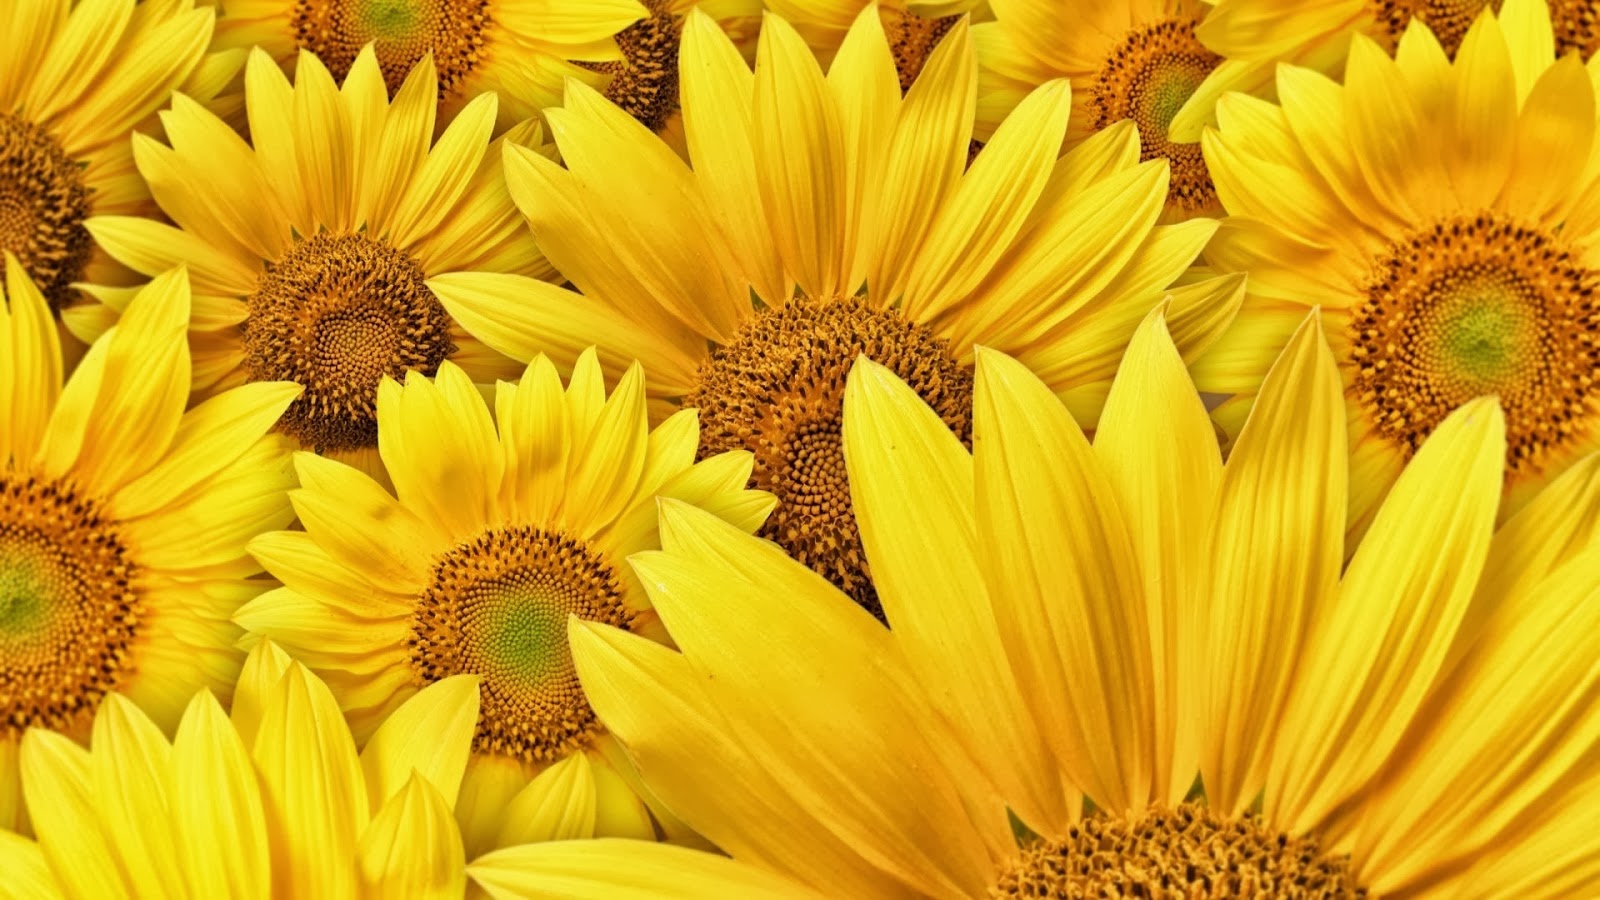 Yellow Sunflower HD Wallpaper In 1080p